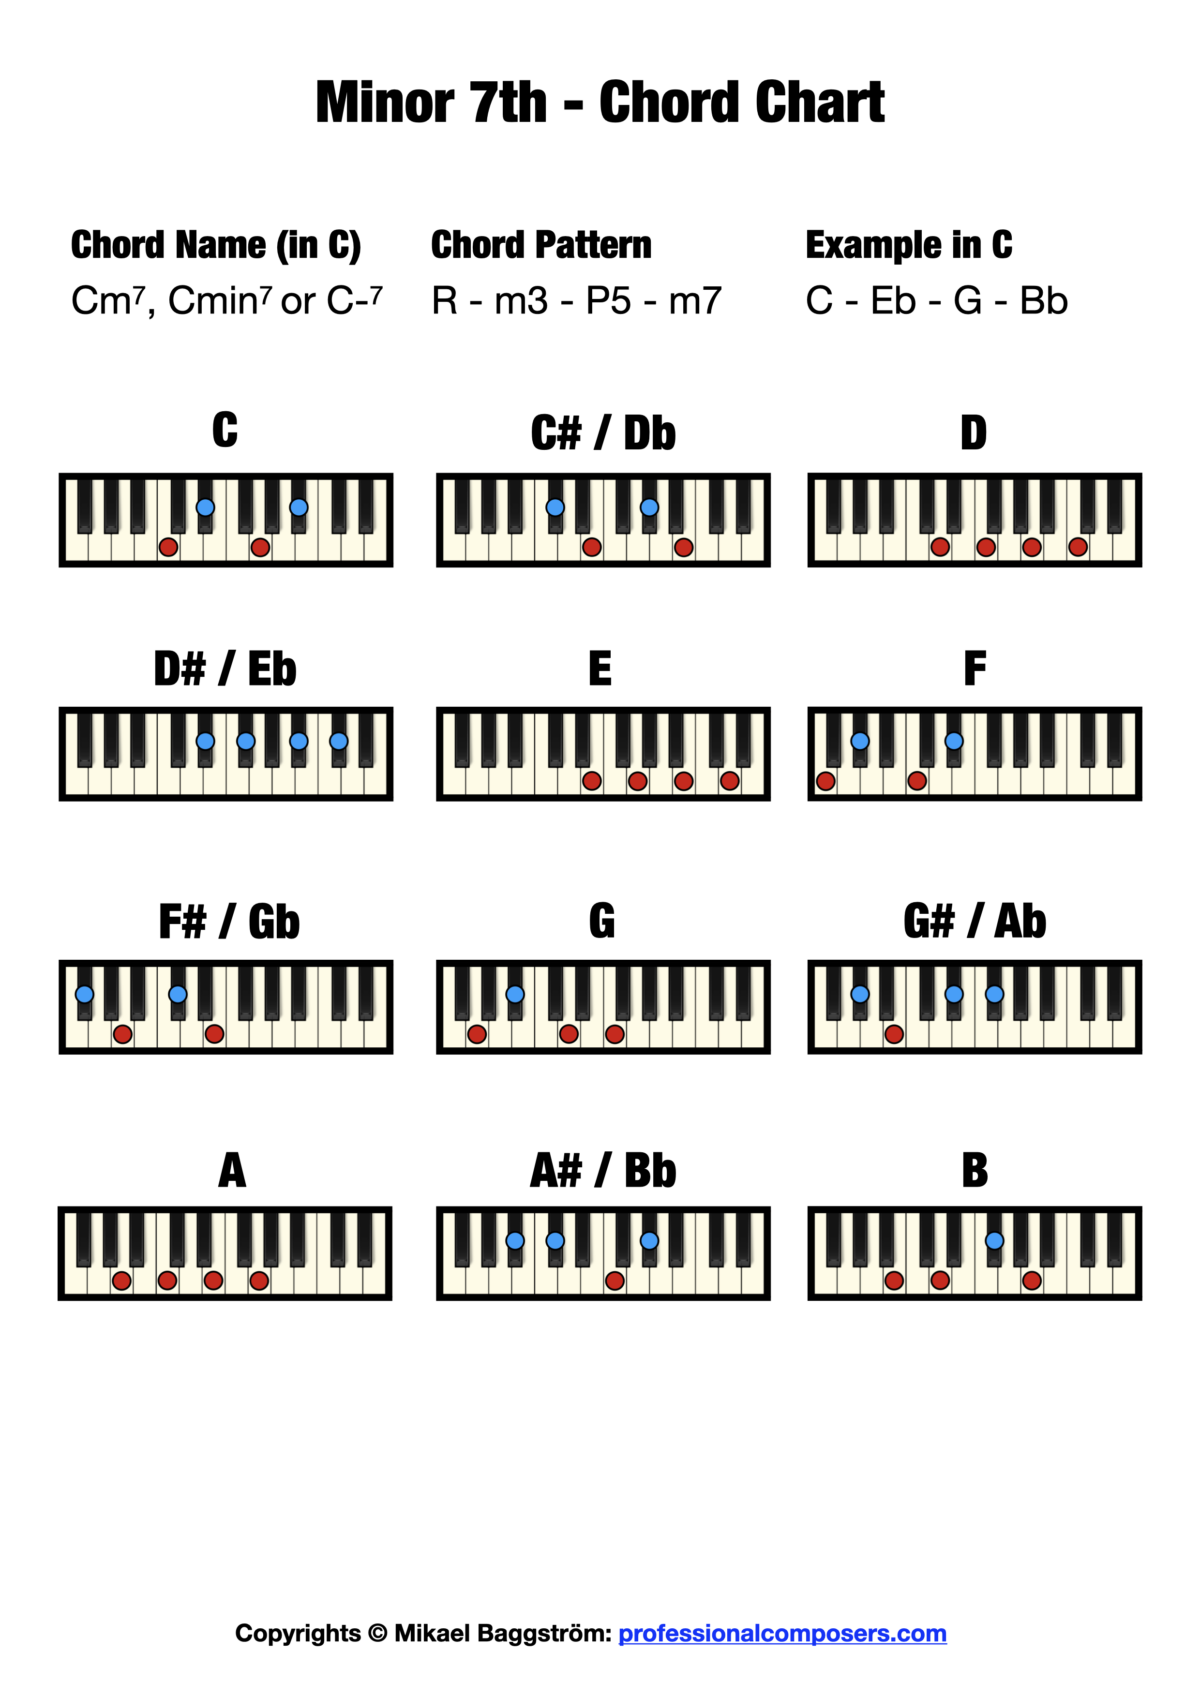 Minor 7th Chord Chart on Piano